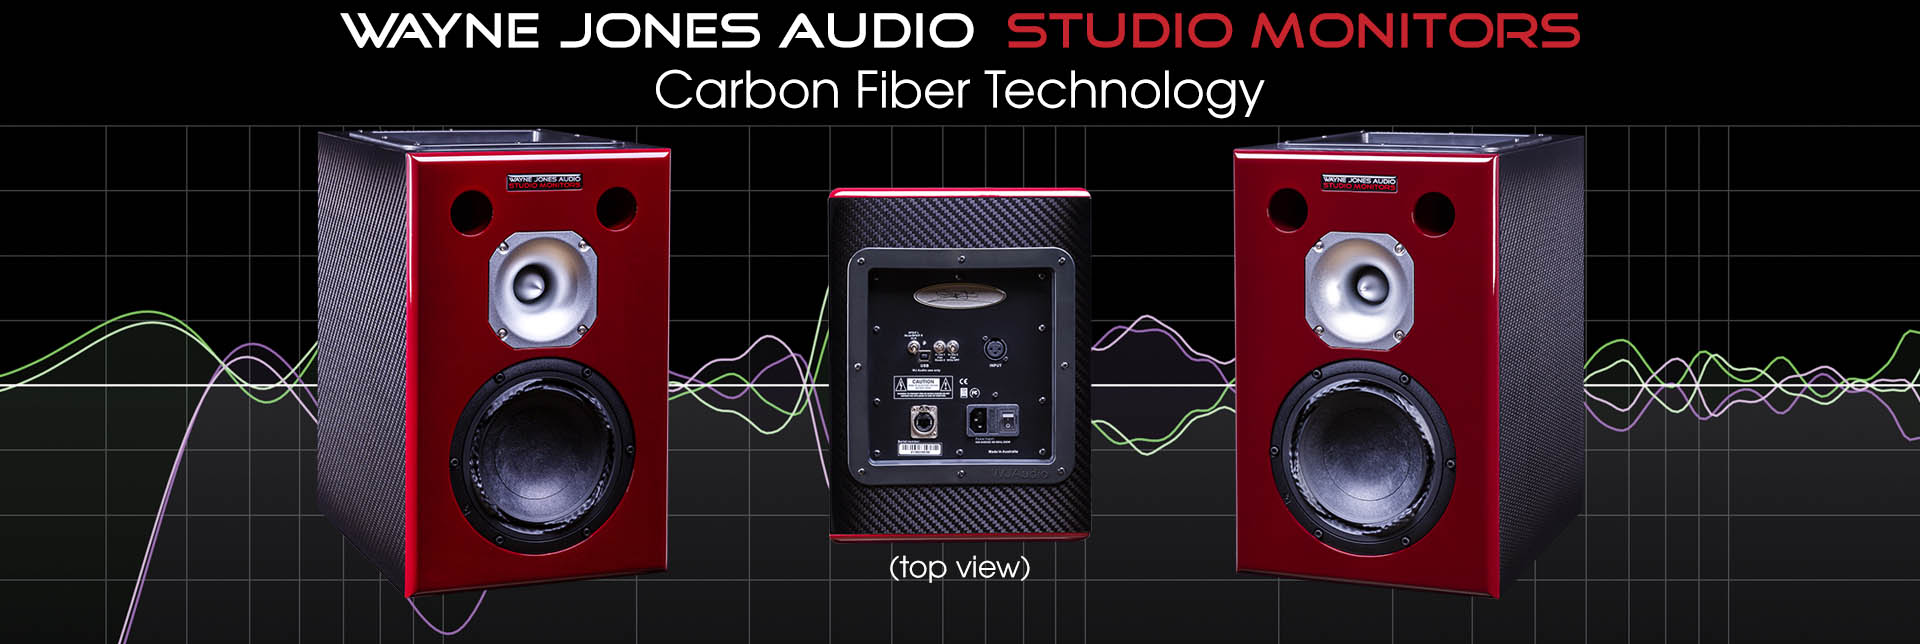 Wayne Jones Audio Carbon Fiber Studio Monitors - 6.5" 650 watt each, recording engineering, audio and film post production, sound track mastering, audio mixing, sound mixing, recording studio gear.